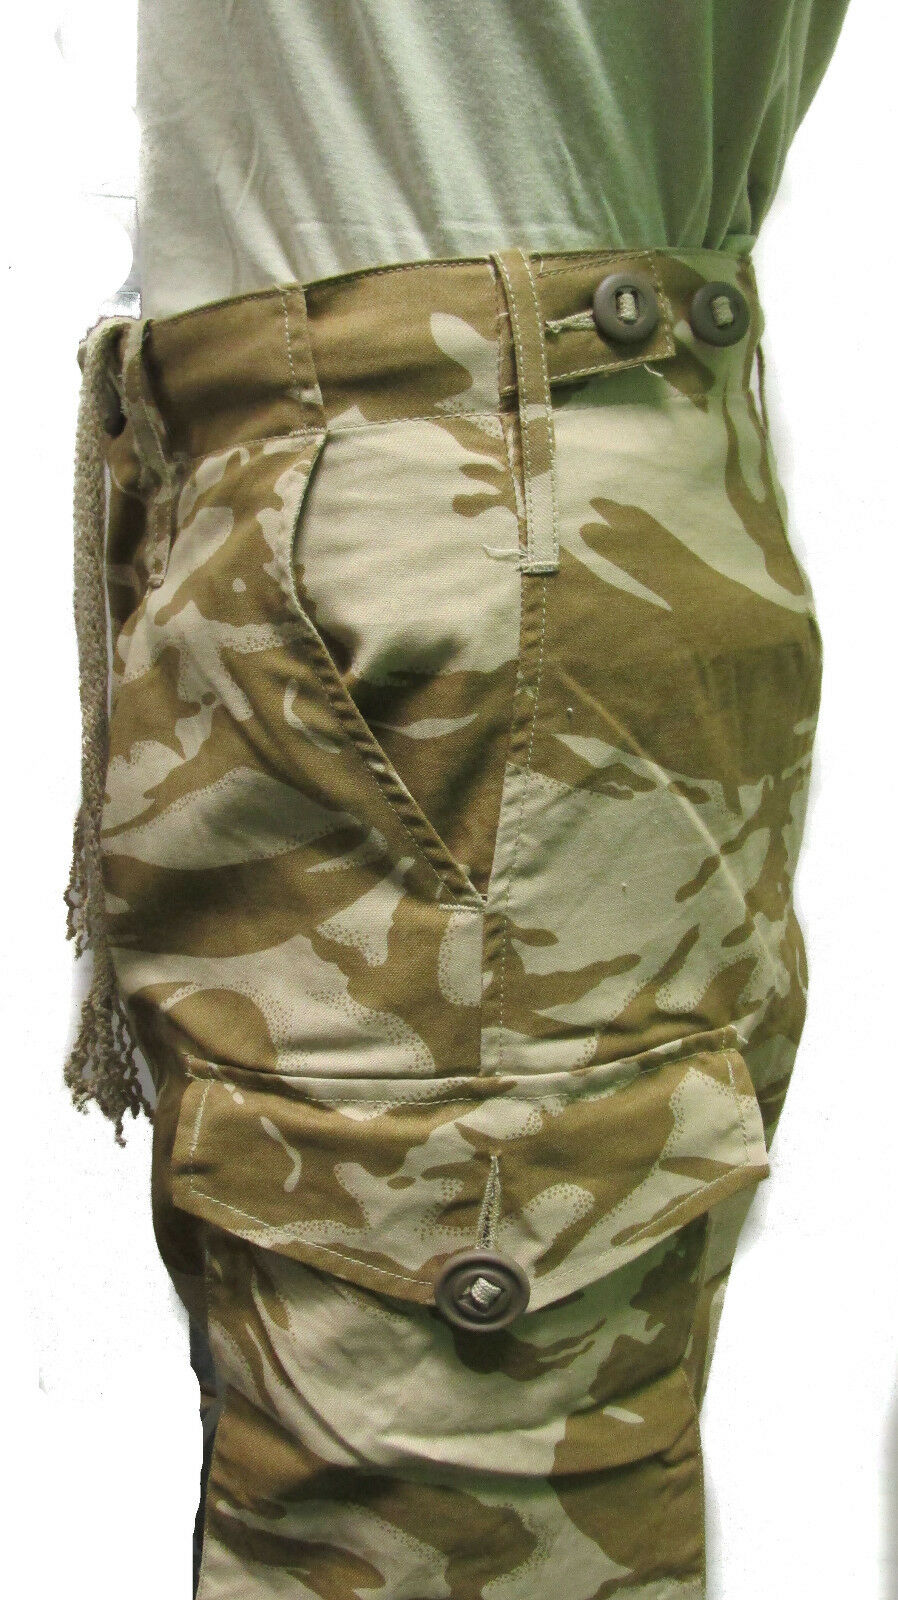 British Military Desert DPM Camo Combat Pants